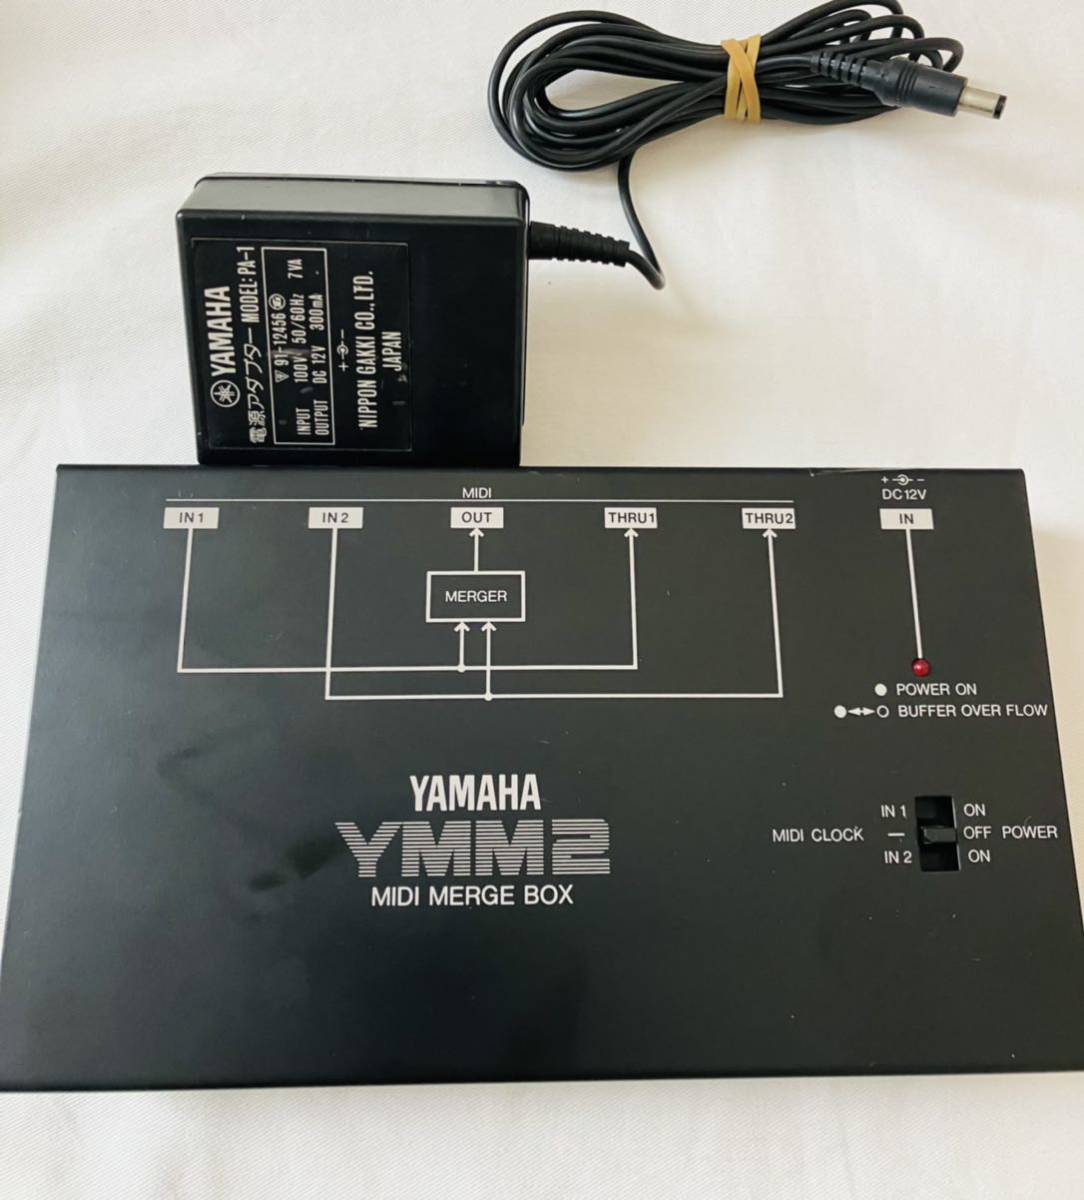 YAMAHA MIDIma-ji box YMM2 электризация проверка 